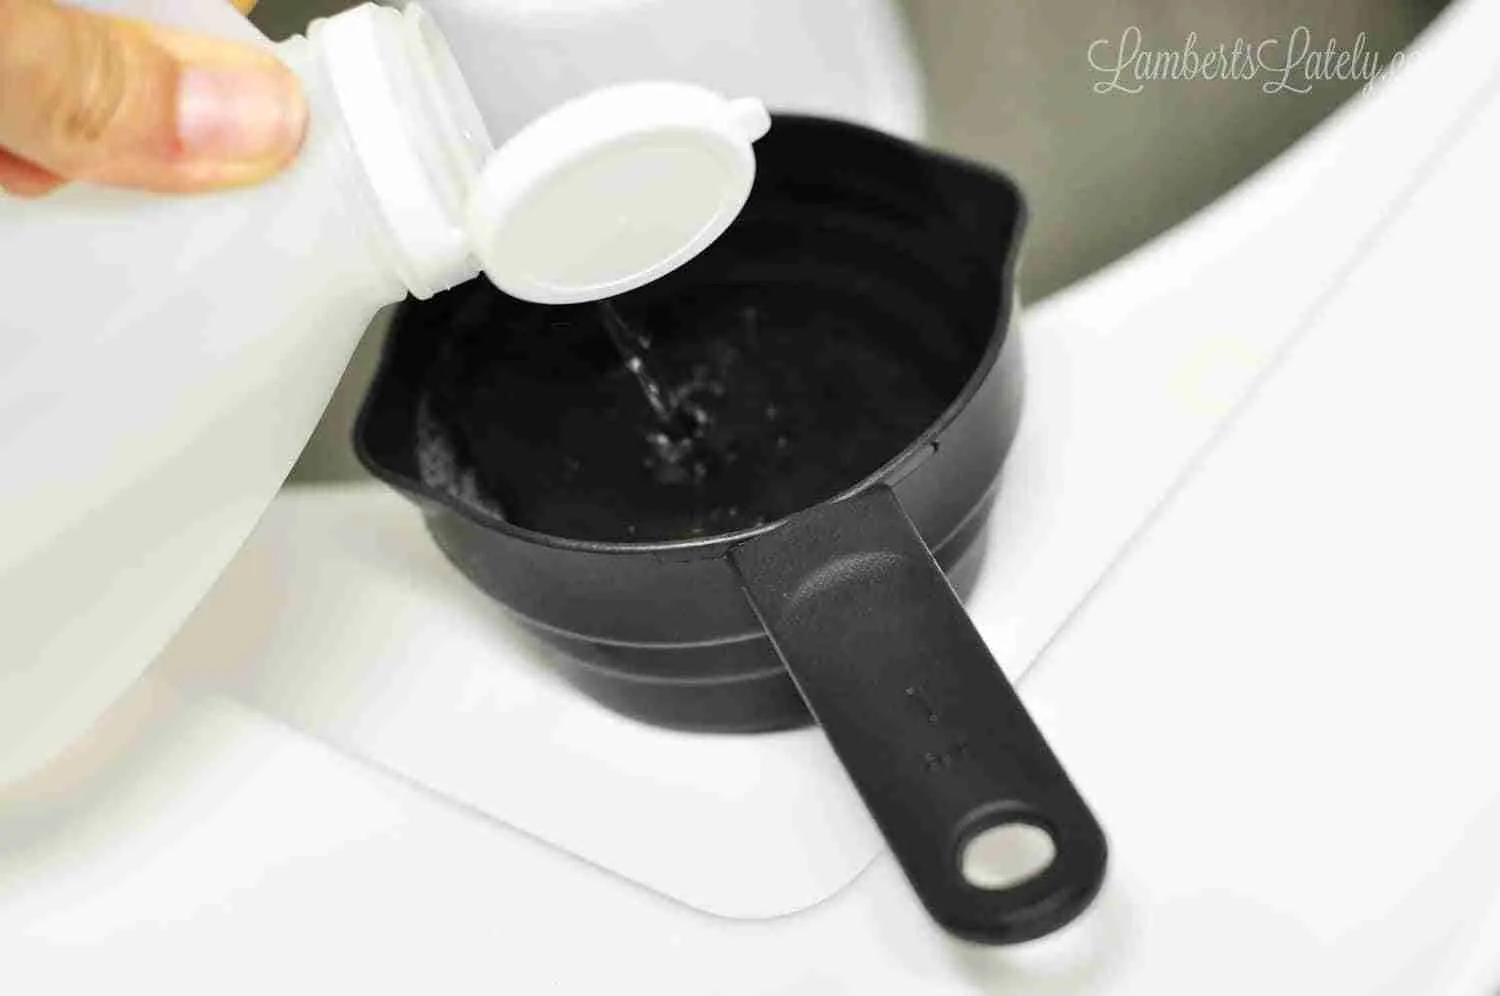 pouring vinegar into a measuring cup